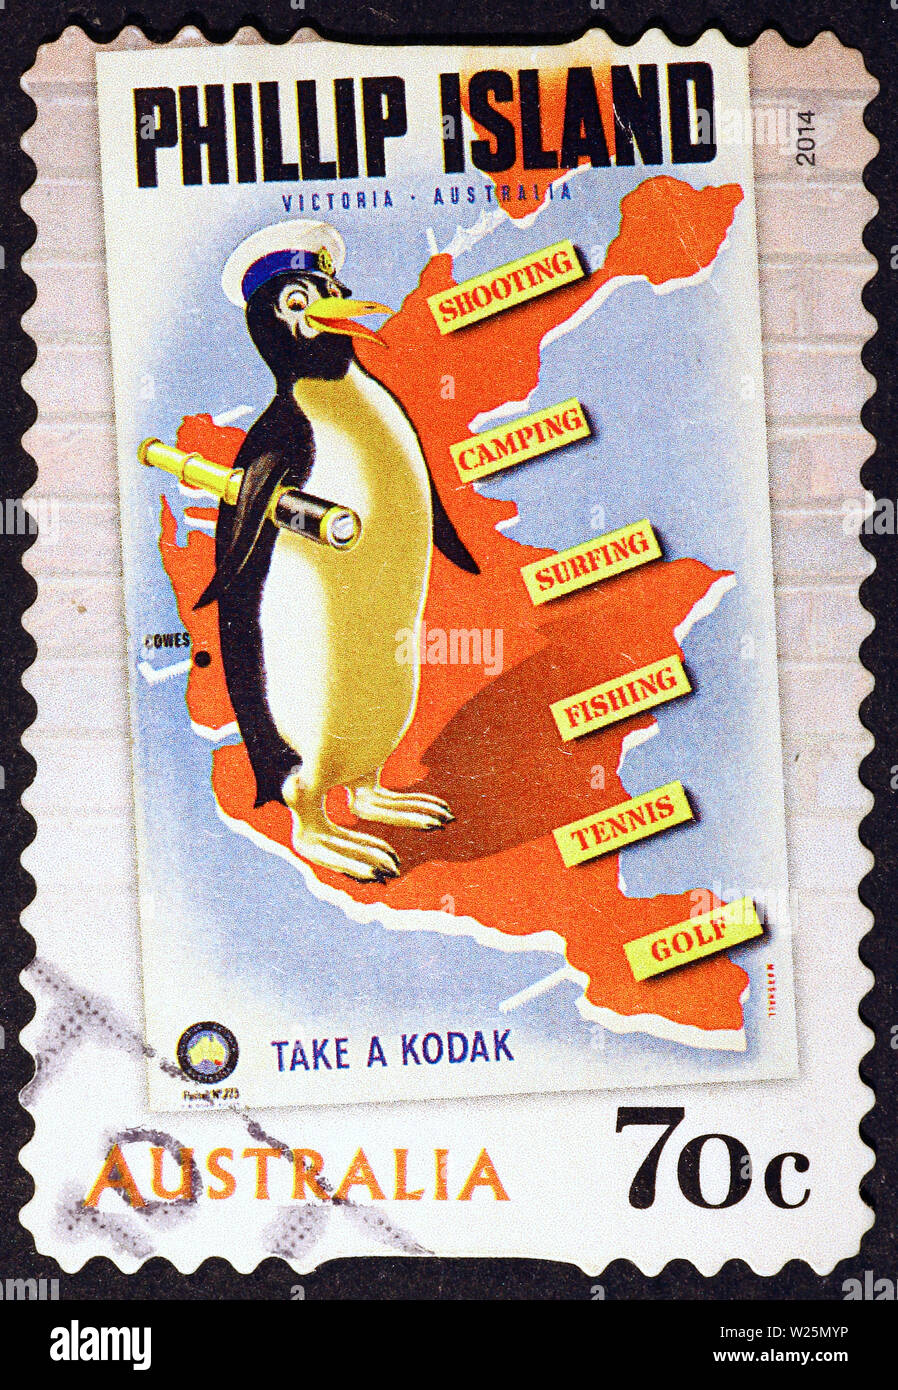 Phillip Island of Australian promoted on postage stamp Stock Photo